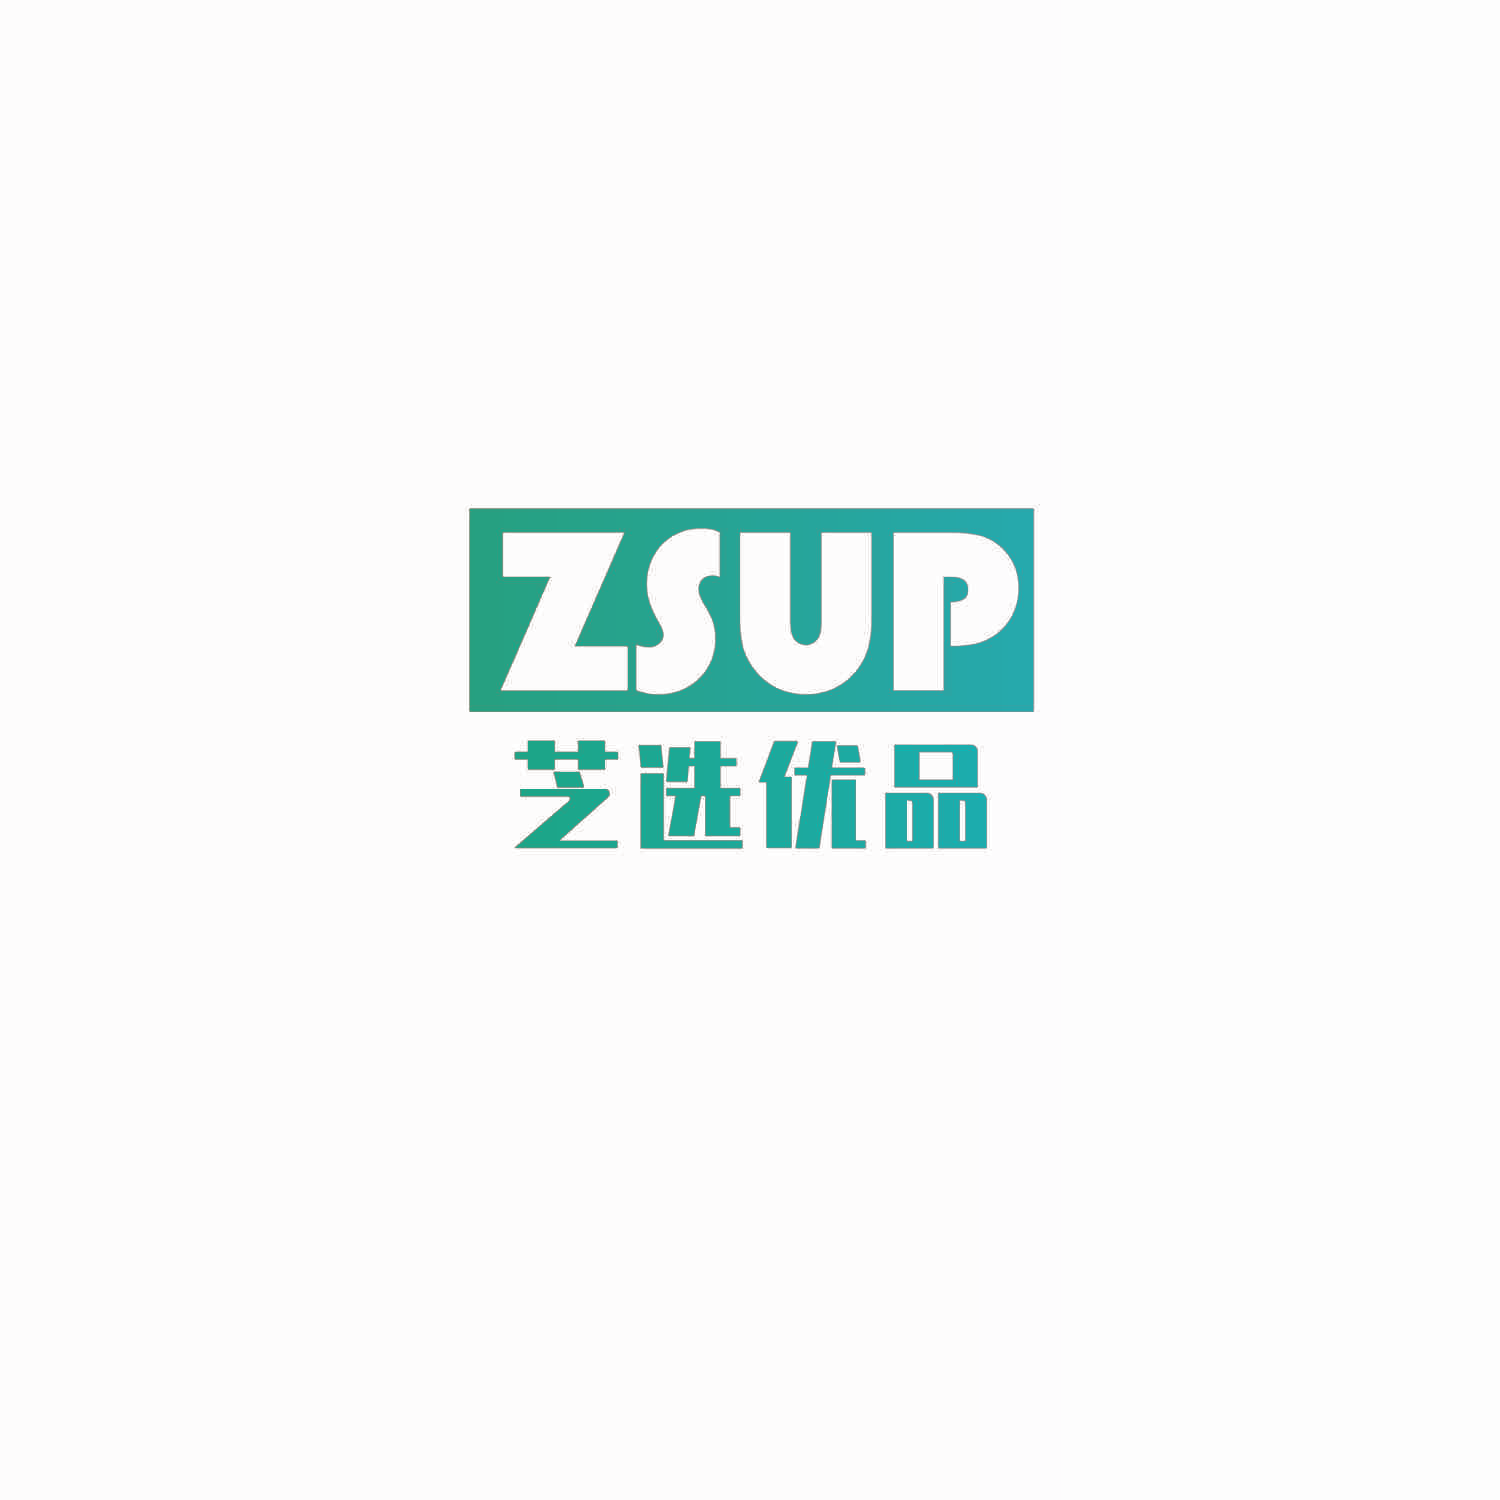 ZSUP 芝选优品